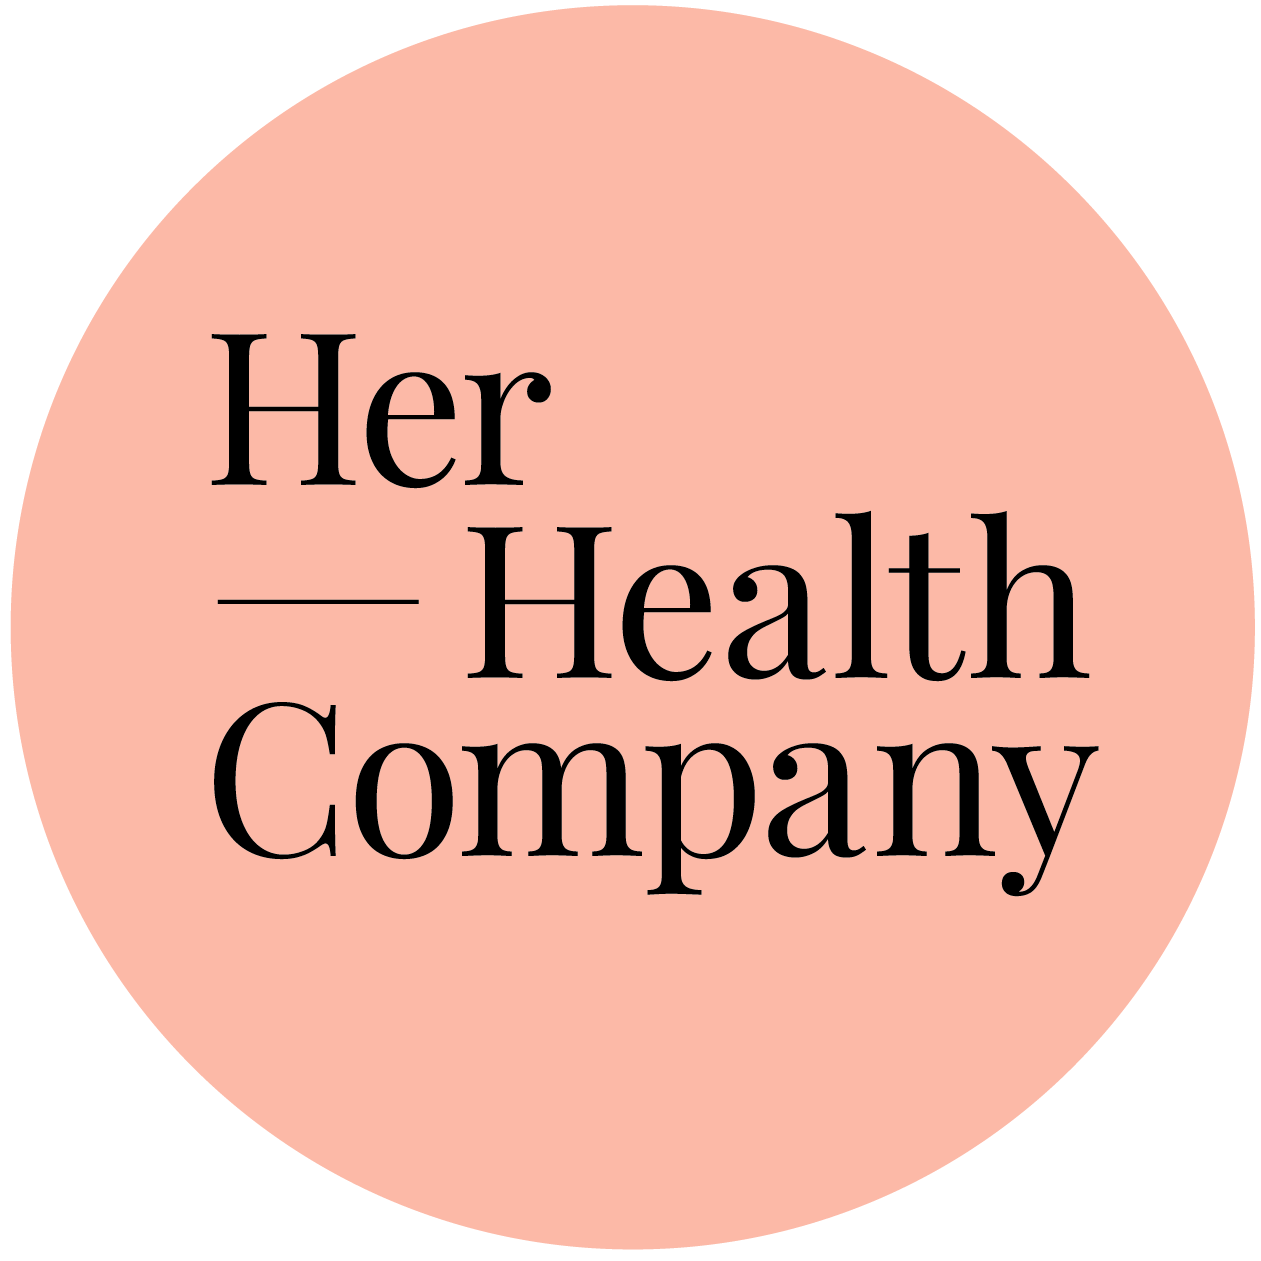 Her Health Company